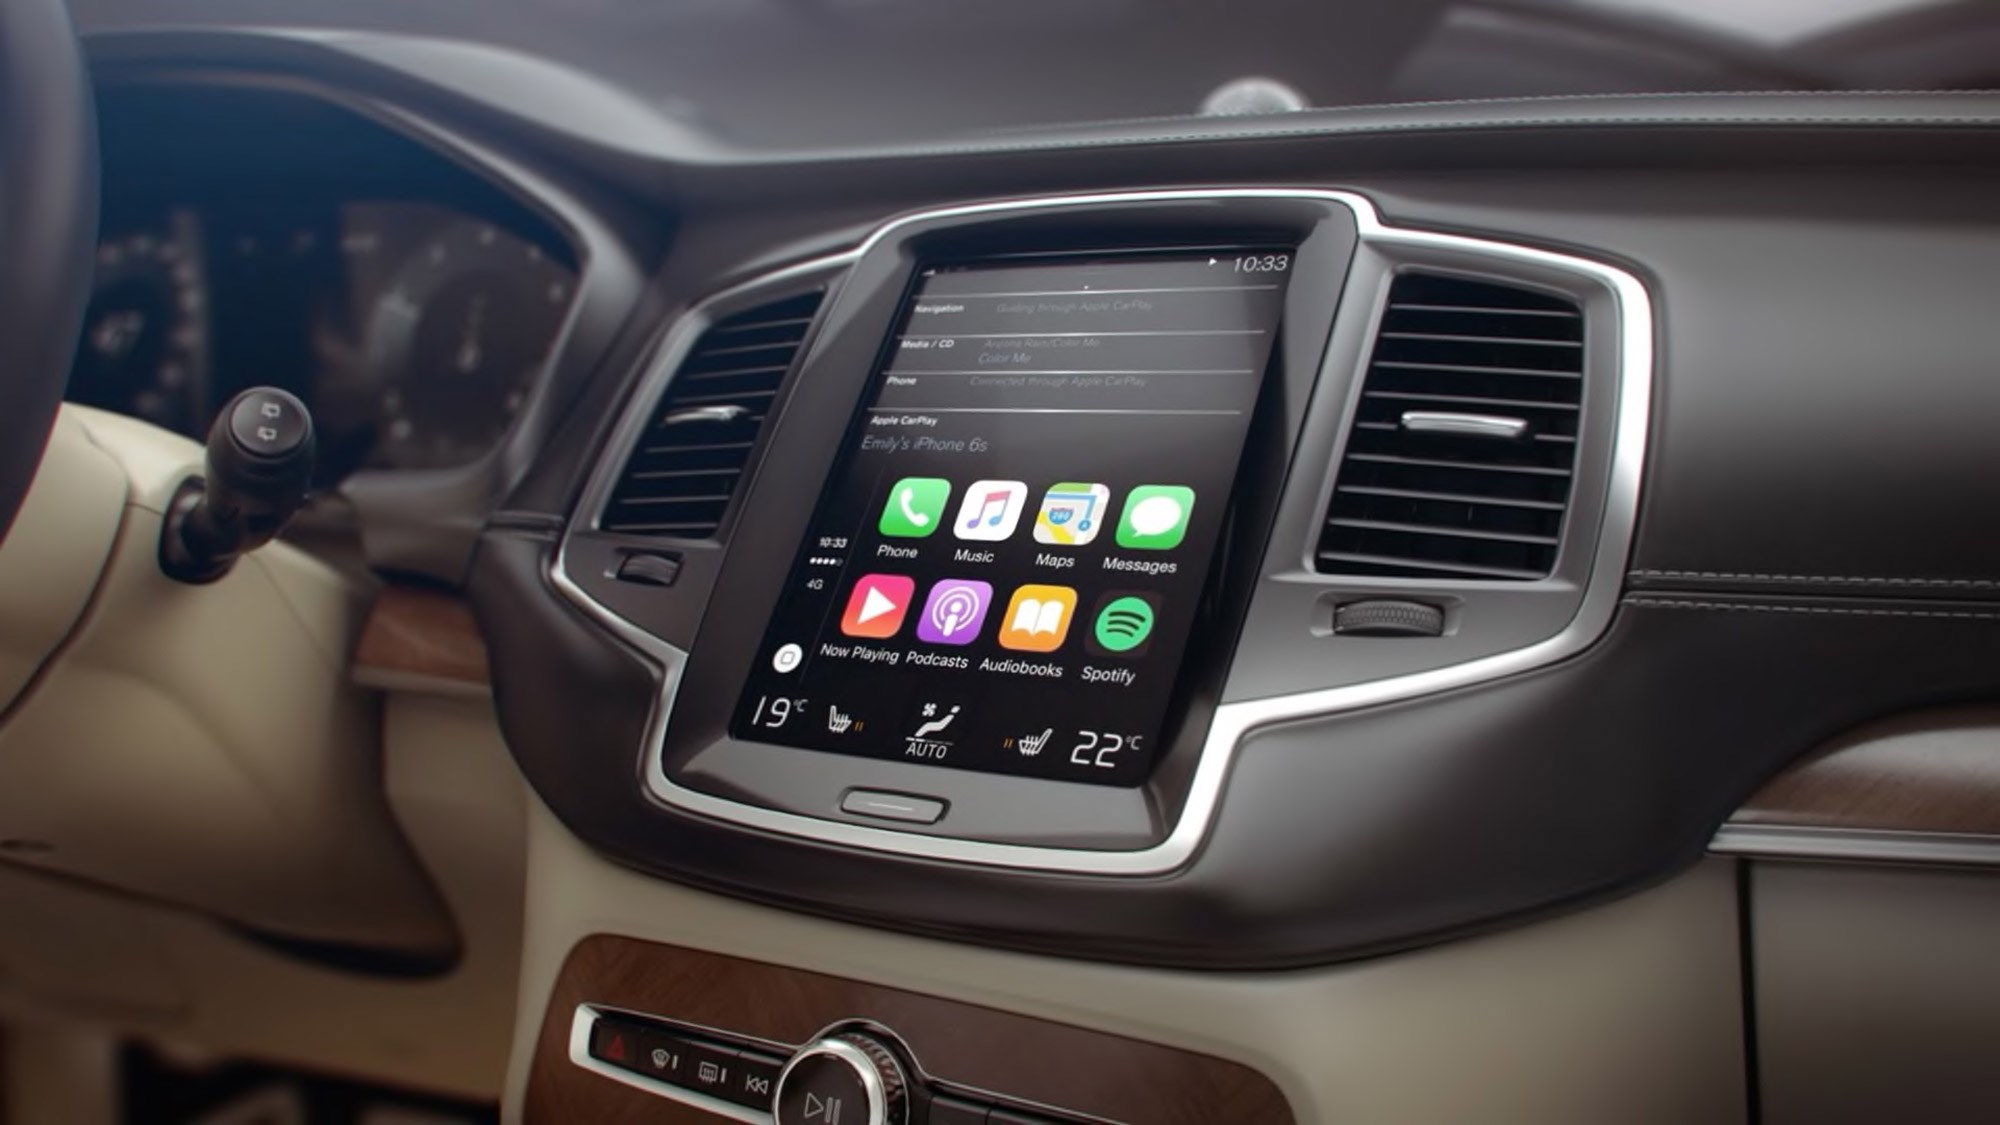 Apple CarPlay: everything you need to know